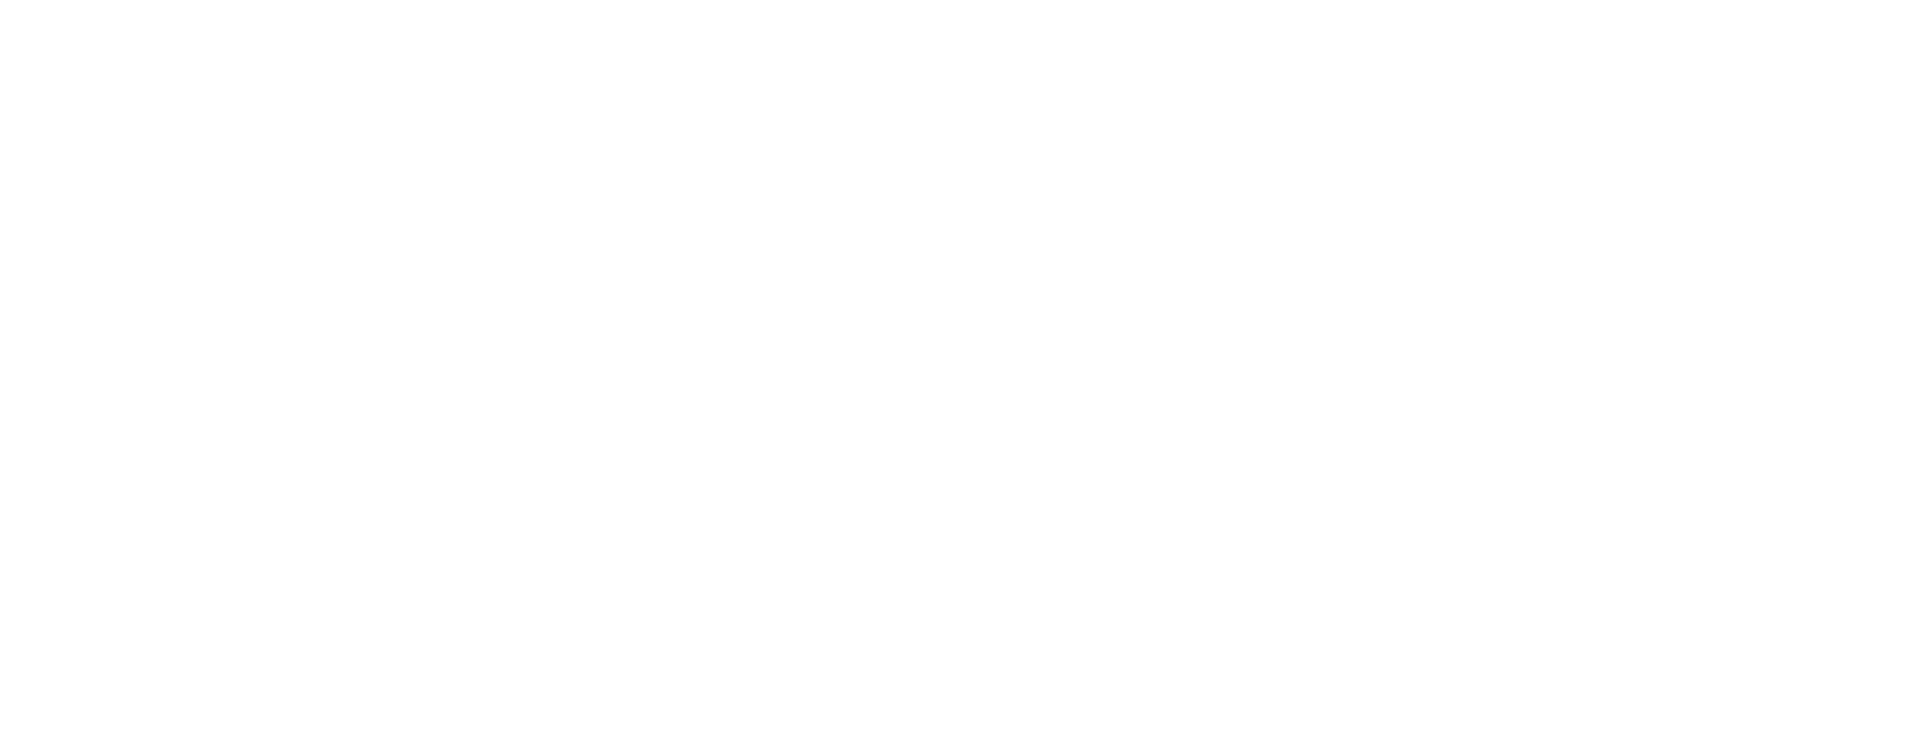 FLOORING